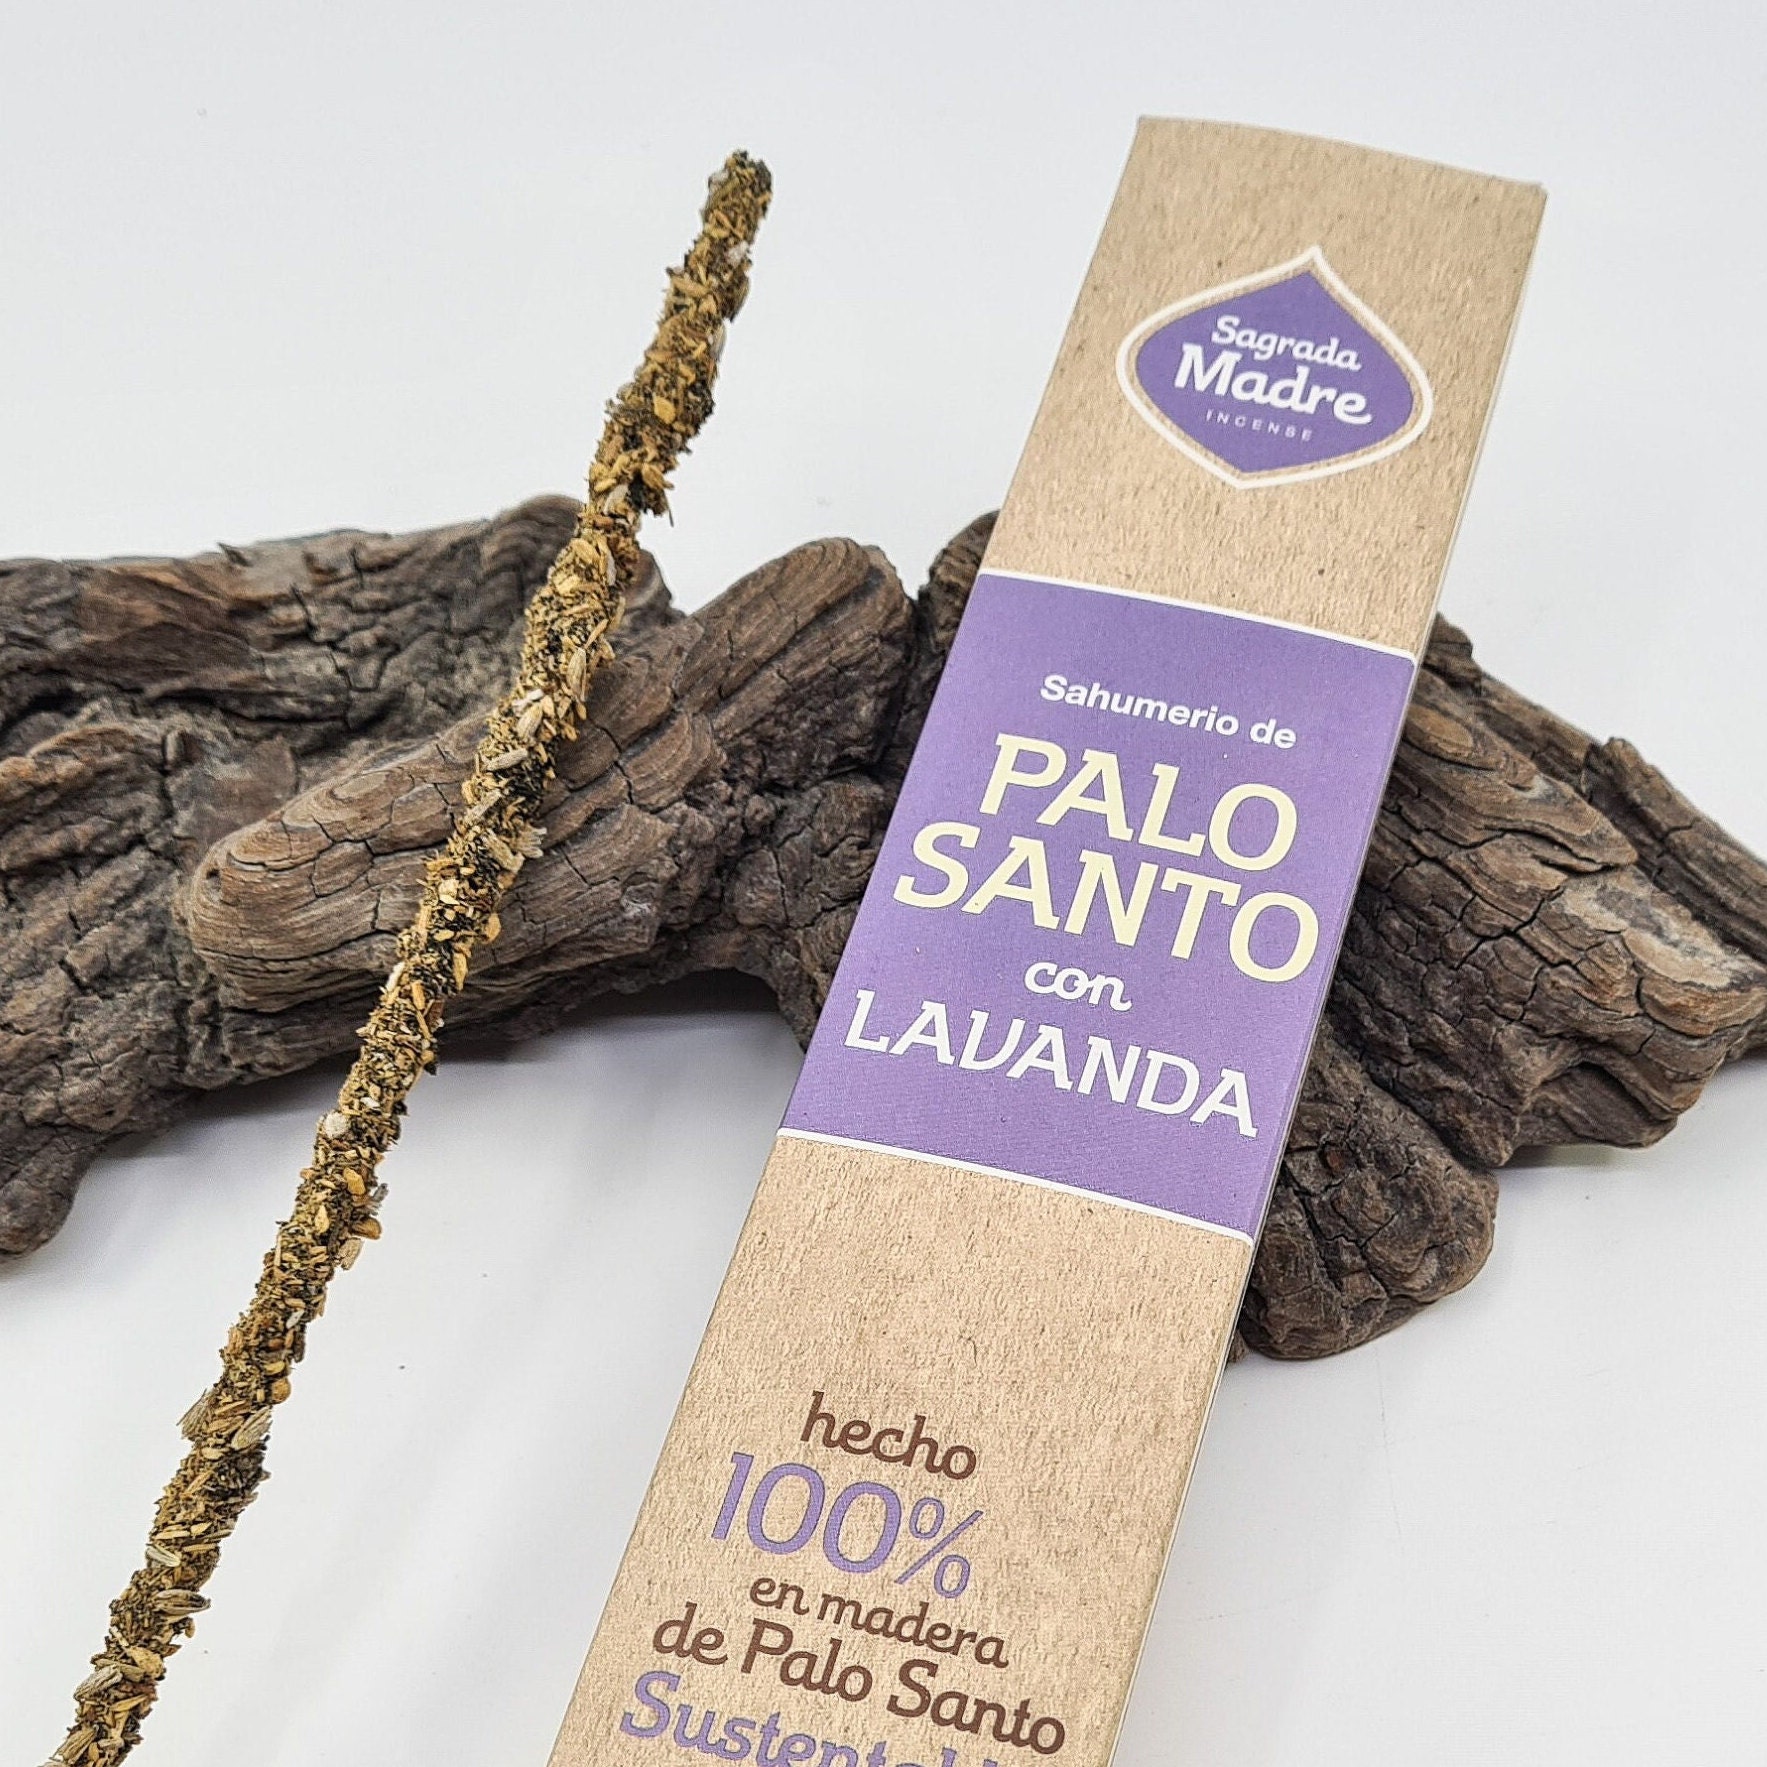 Premium Purification Incense Kit scented with Palo Santo Sagrada Madre